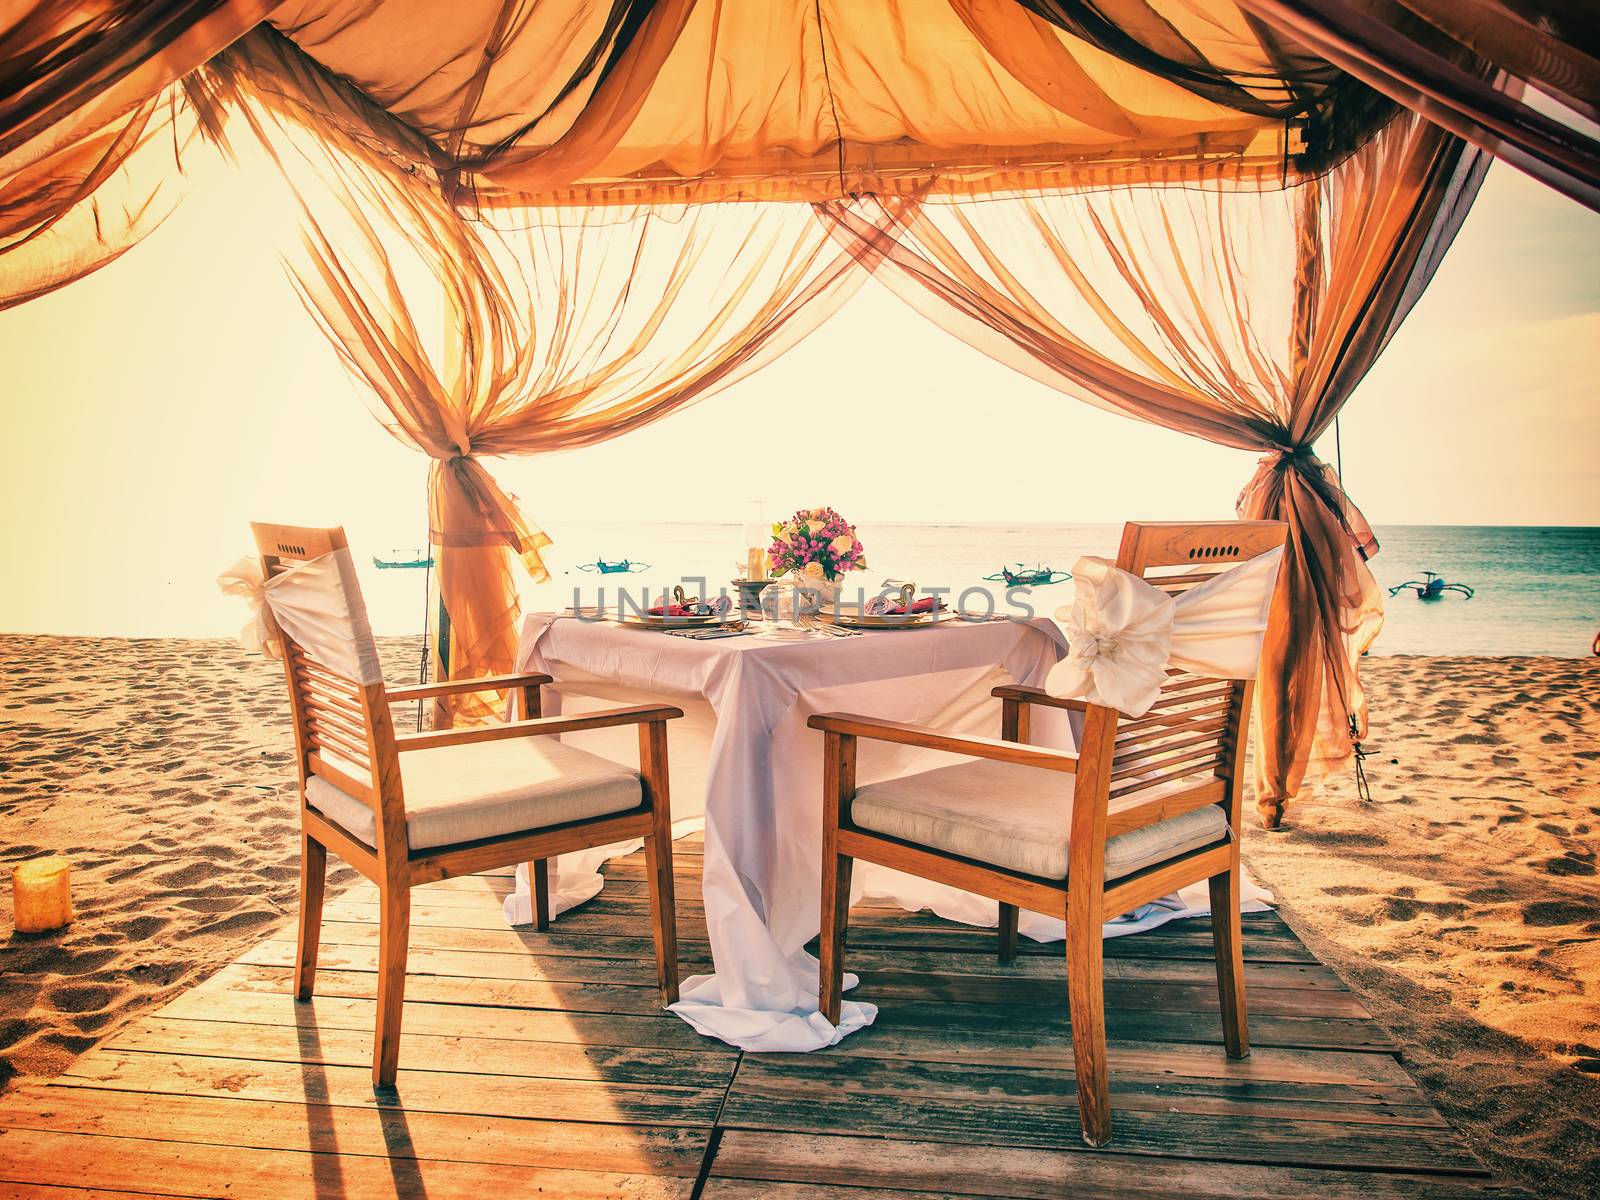 Romantic dinner setting on the beach by Netfalls